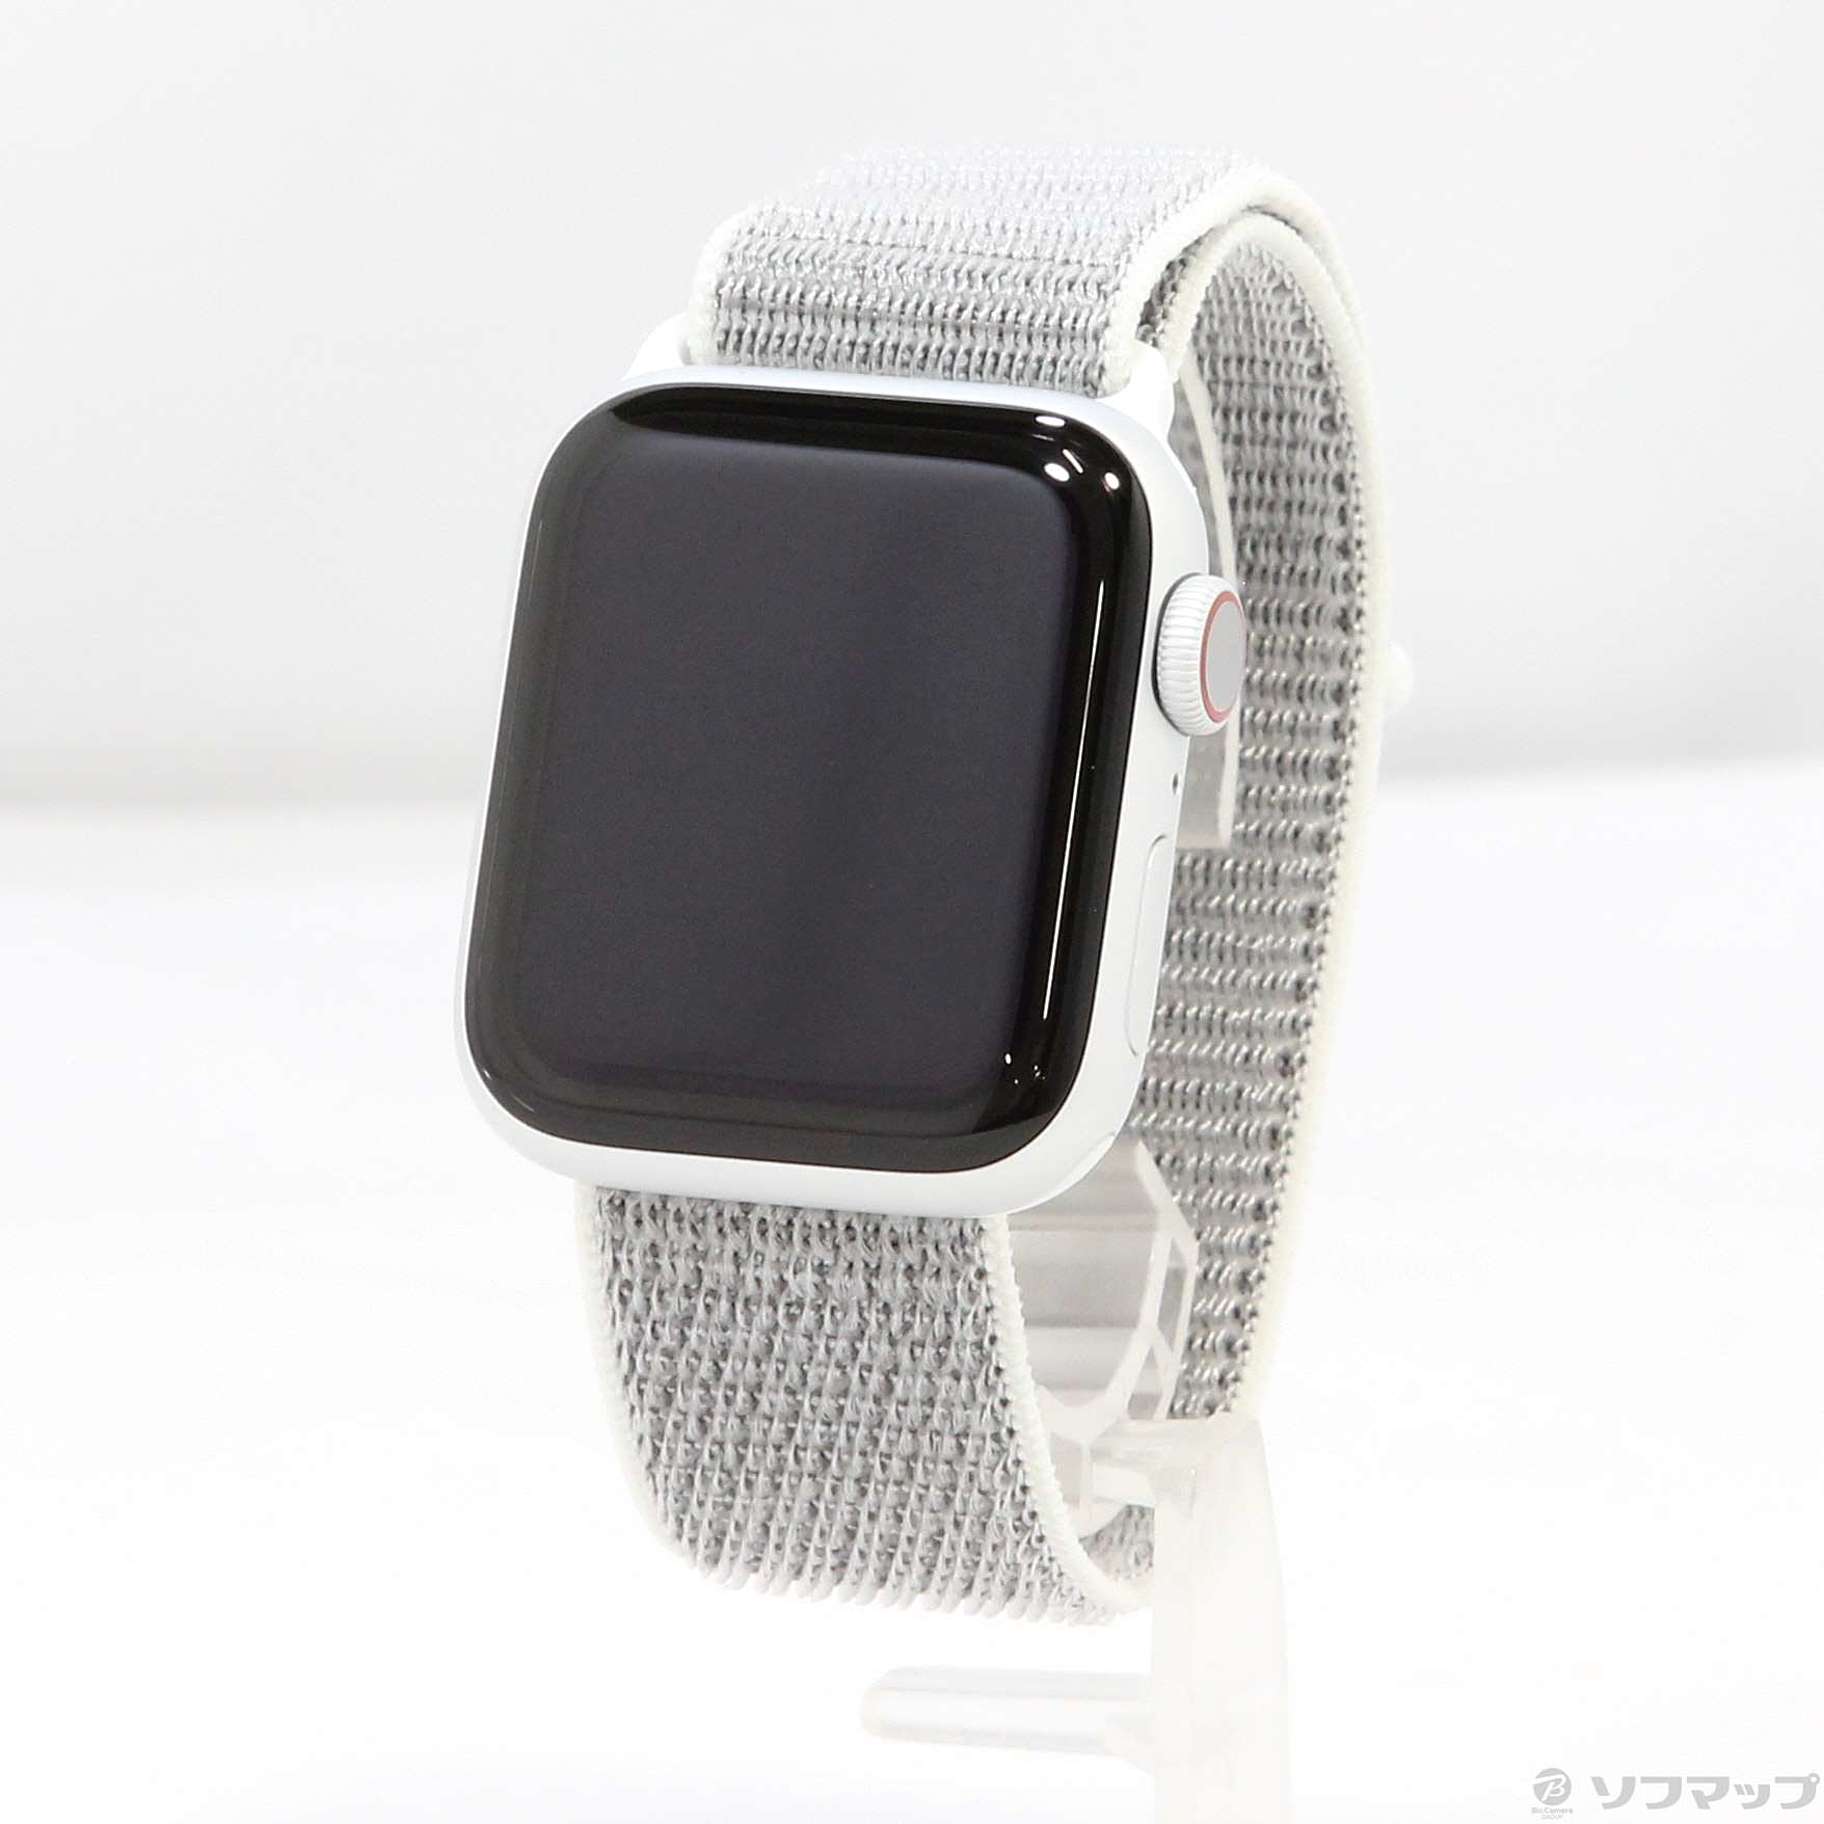 Apple(アップル) Apple Watch Series 4 GPS + Cellular 40mm シルバー